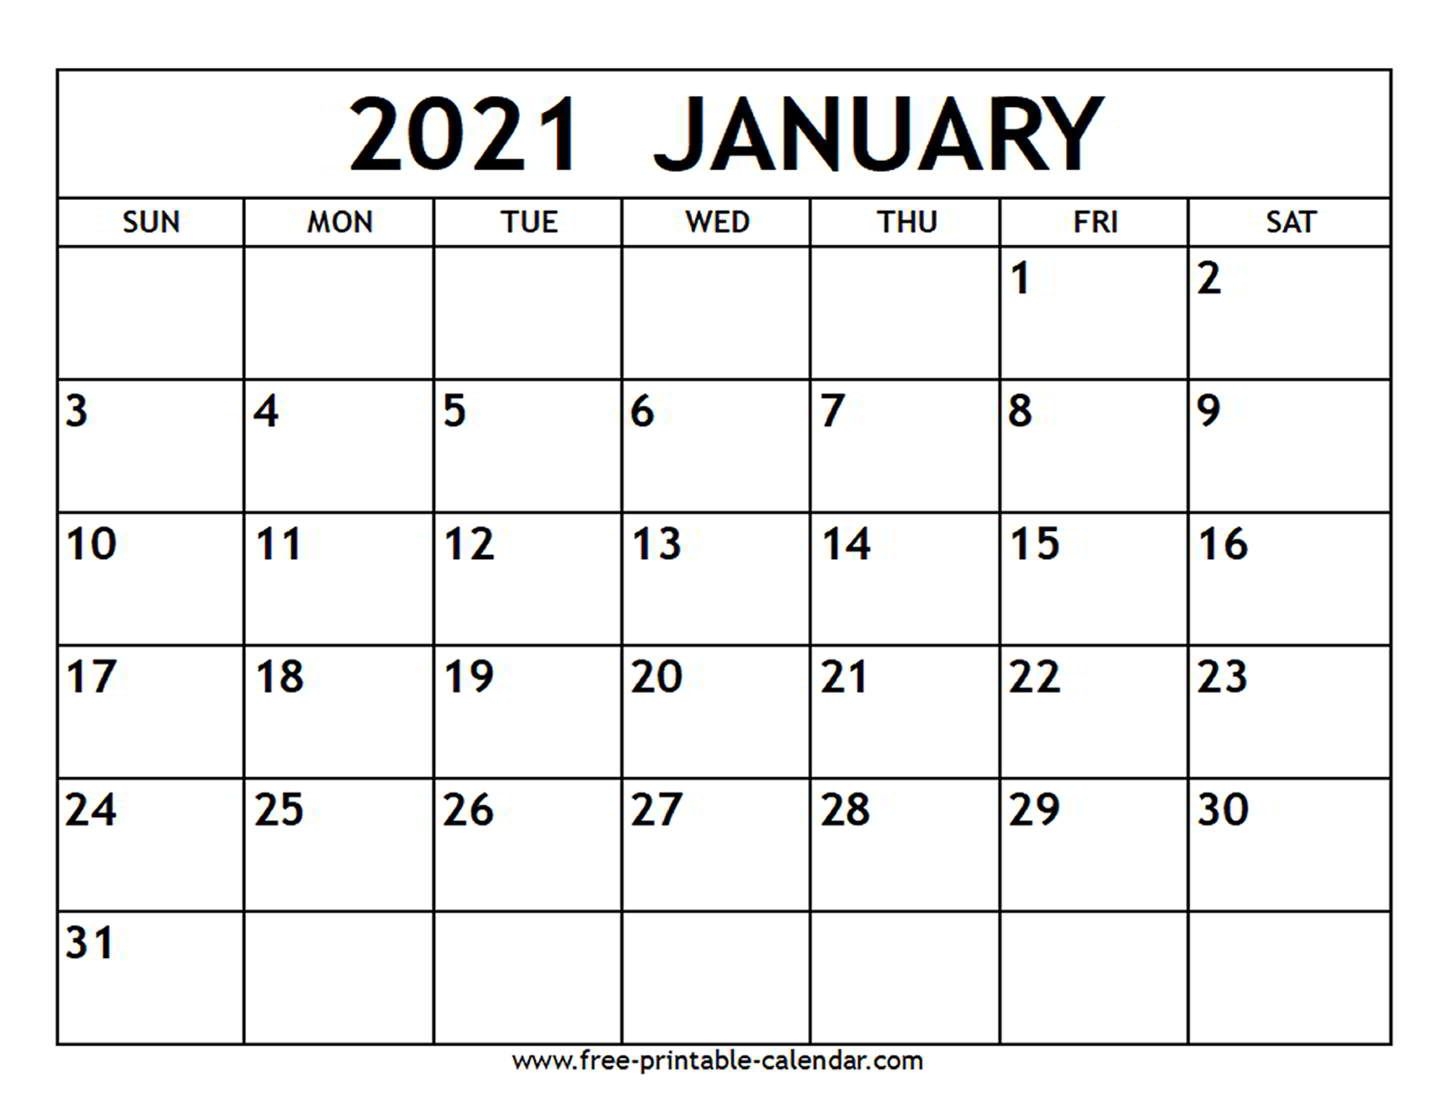 perfect-calendar-2021-2021-2021-printable-free-get-your-calendar